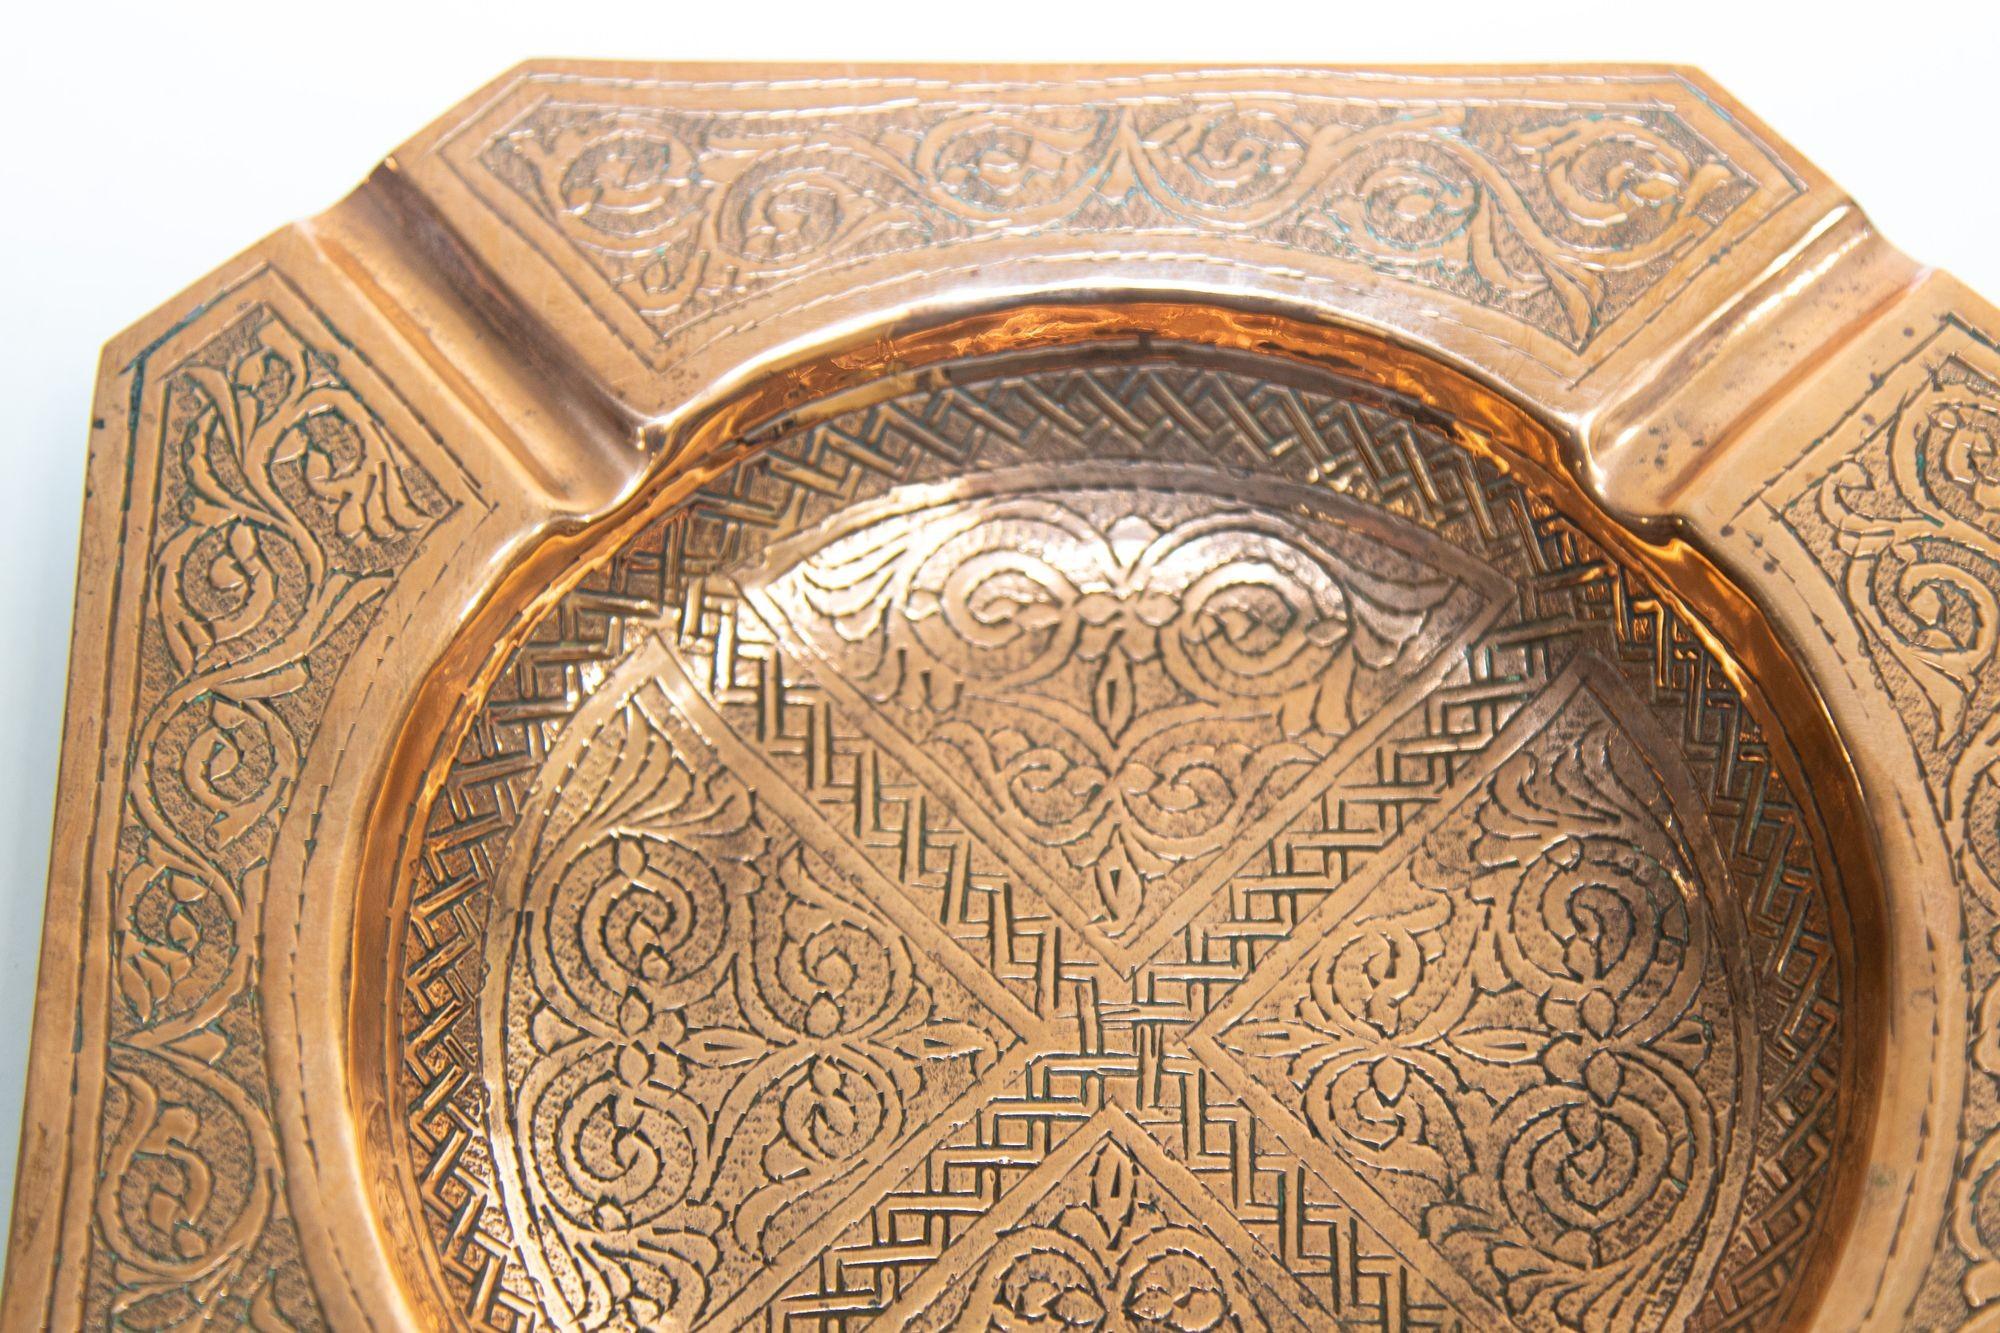 Large Moorish copper ashtray octagonal metal ashtray hand-engraved with Moorish mosaic geometric designs.
Vintage large hammered copper Moroccan mosaic ashtray, trinket dish, catchall, vide poche, brass metal Moorish tray, decorative dish.
This is